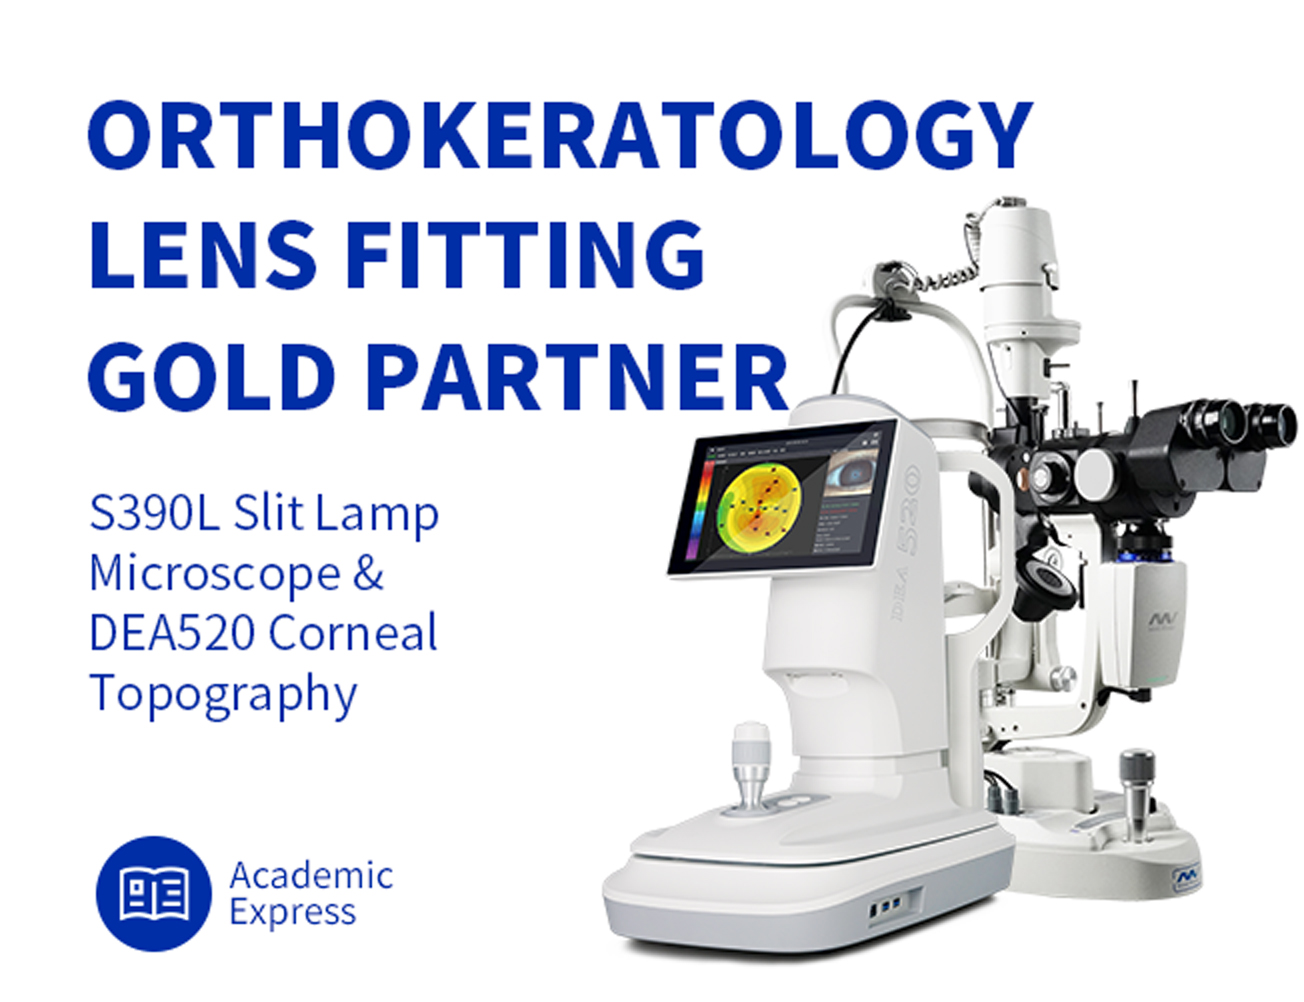 S390L Slit Lamp Microscope & DEA520 Corneal Topography, orthokeratology lens fitting gold partner